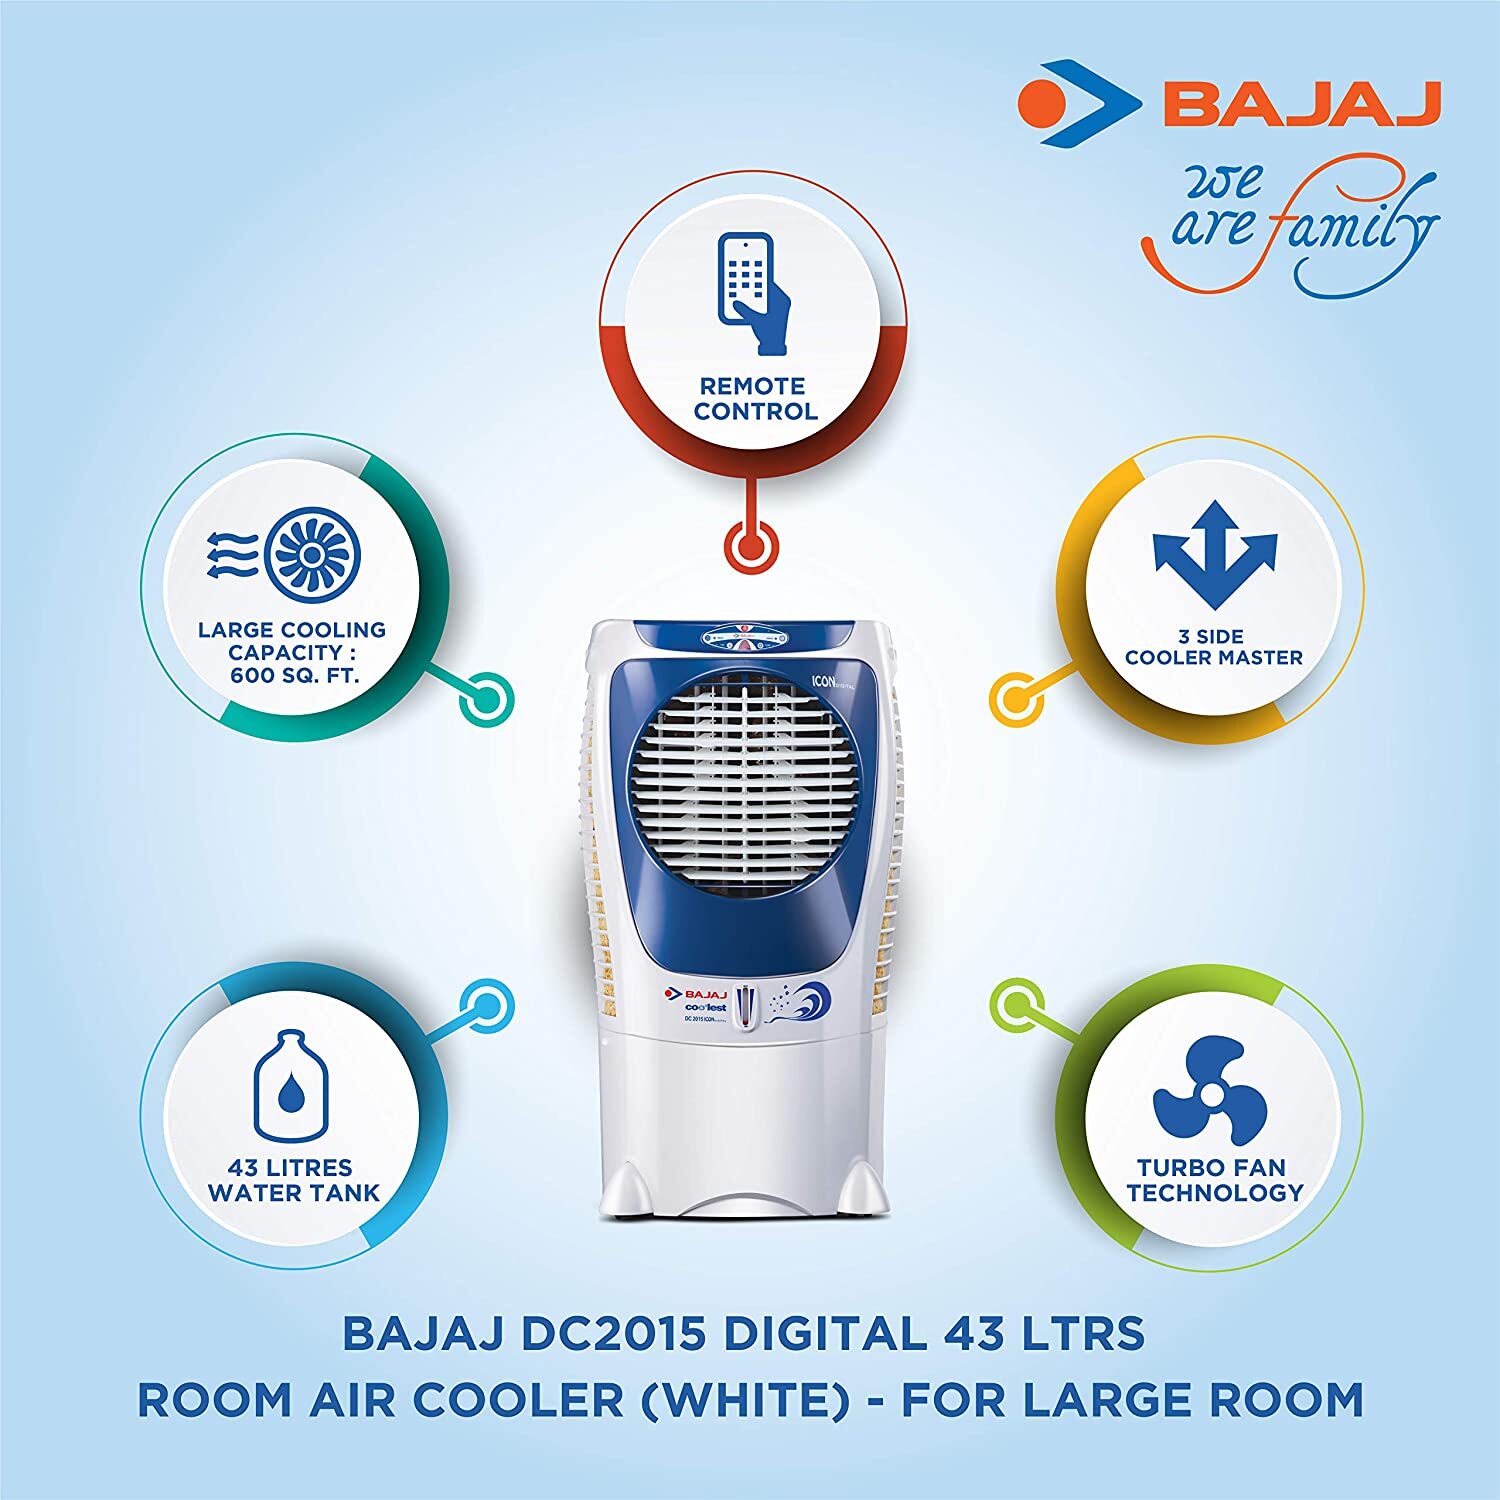 Bajaj DC 2015 ICON Digital Desert Air Cooler 43L in White/Blue shade-M000000000403 www.mysocially.com